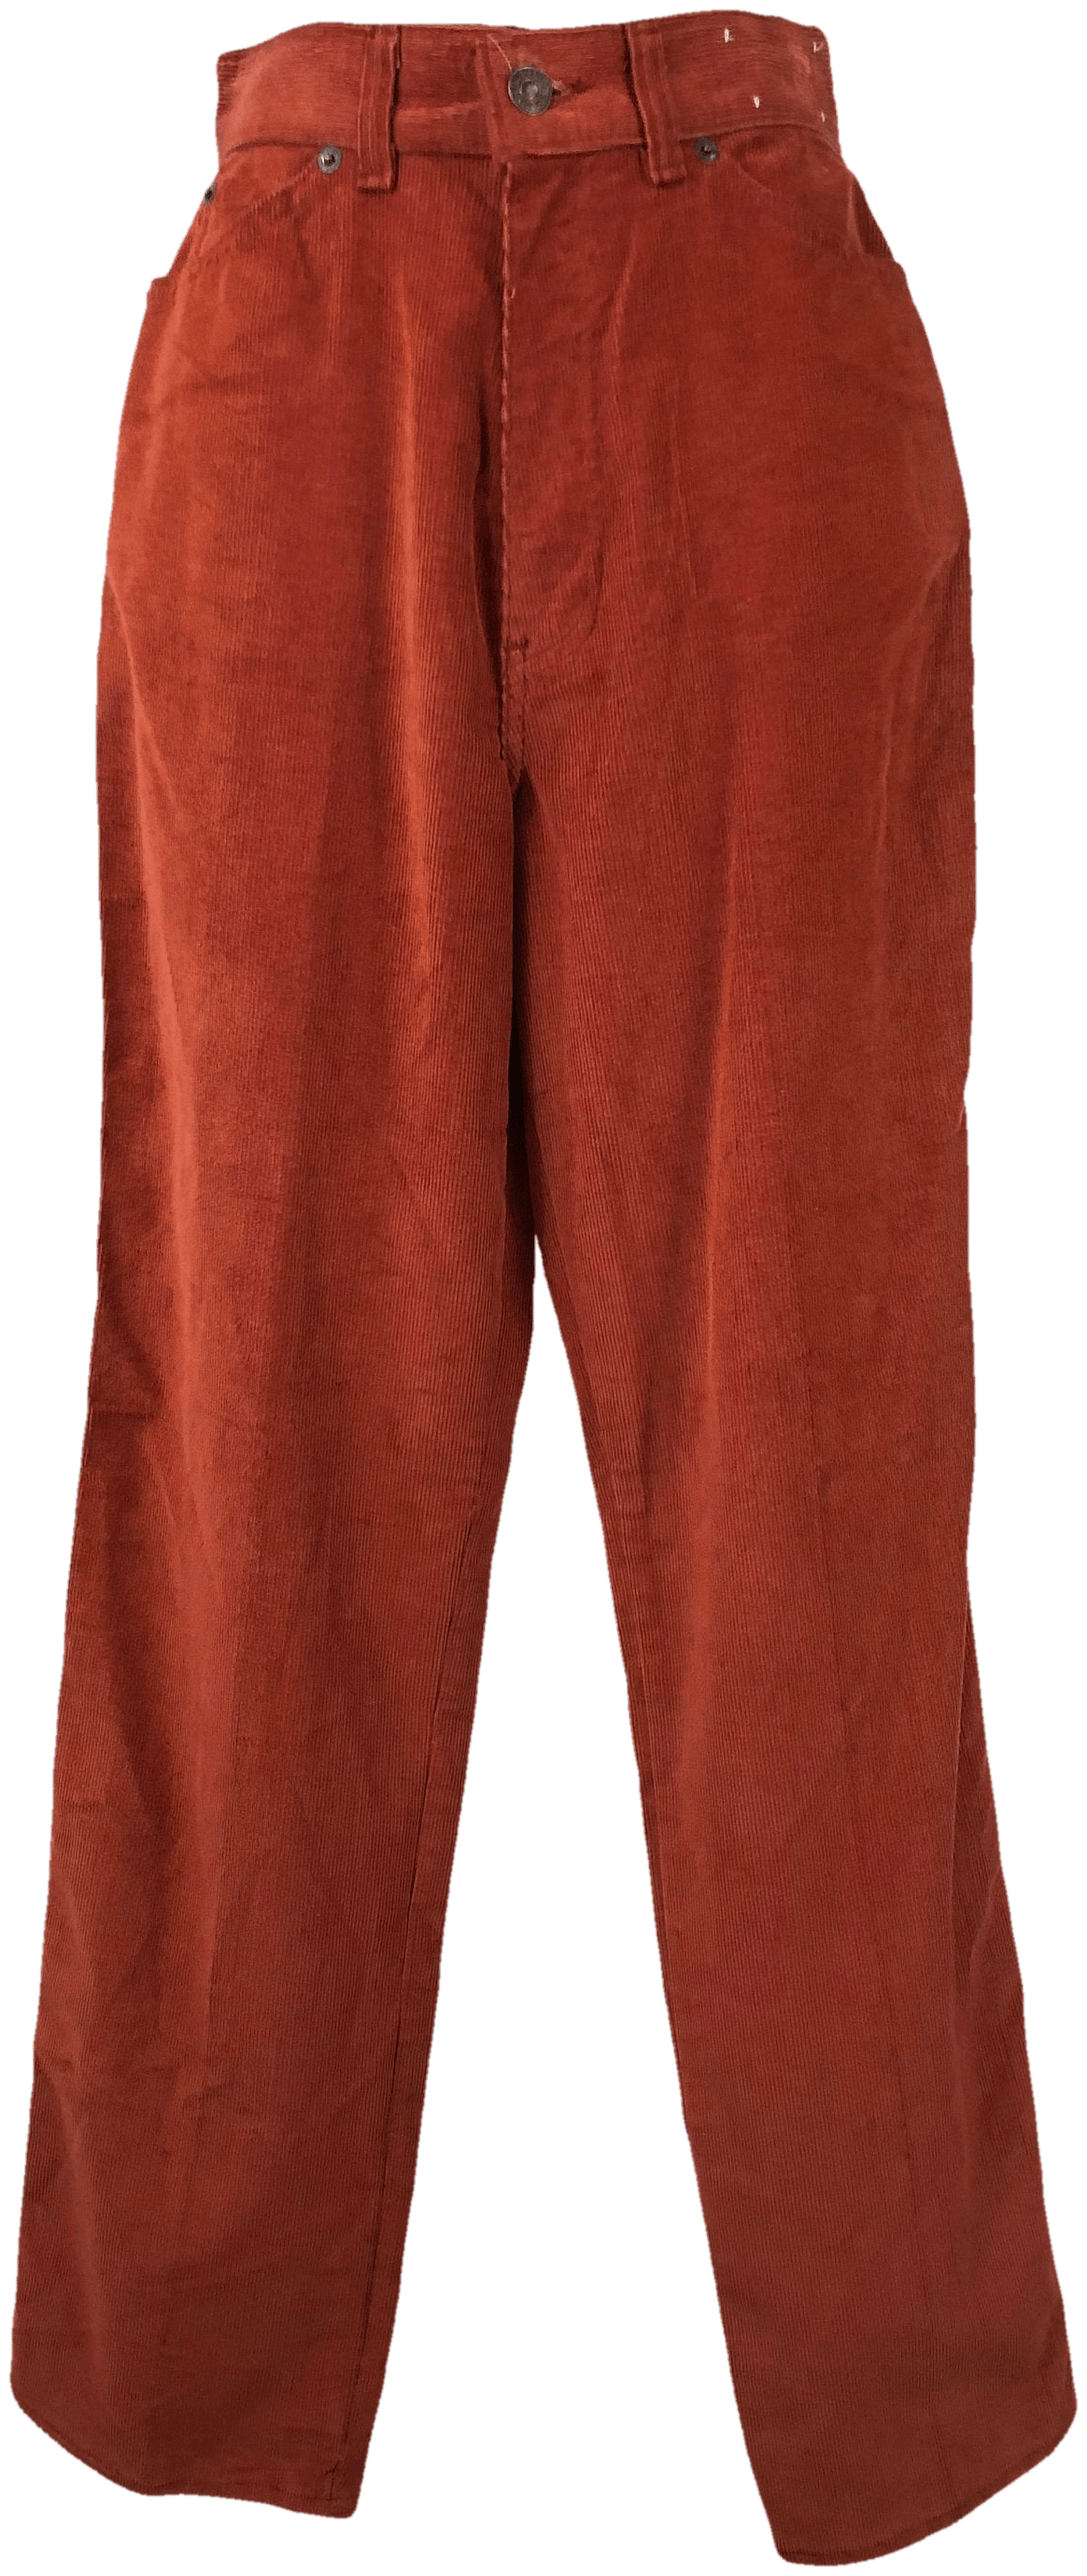 Vintage 70's Rust Orange Corduroy Jeans by Levi's | Shop THRILLING